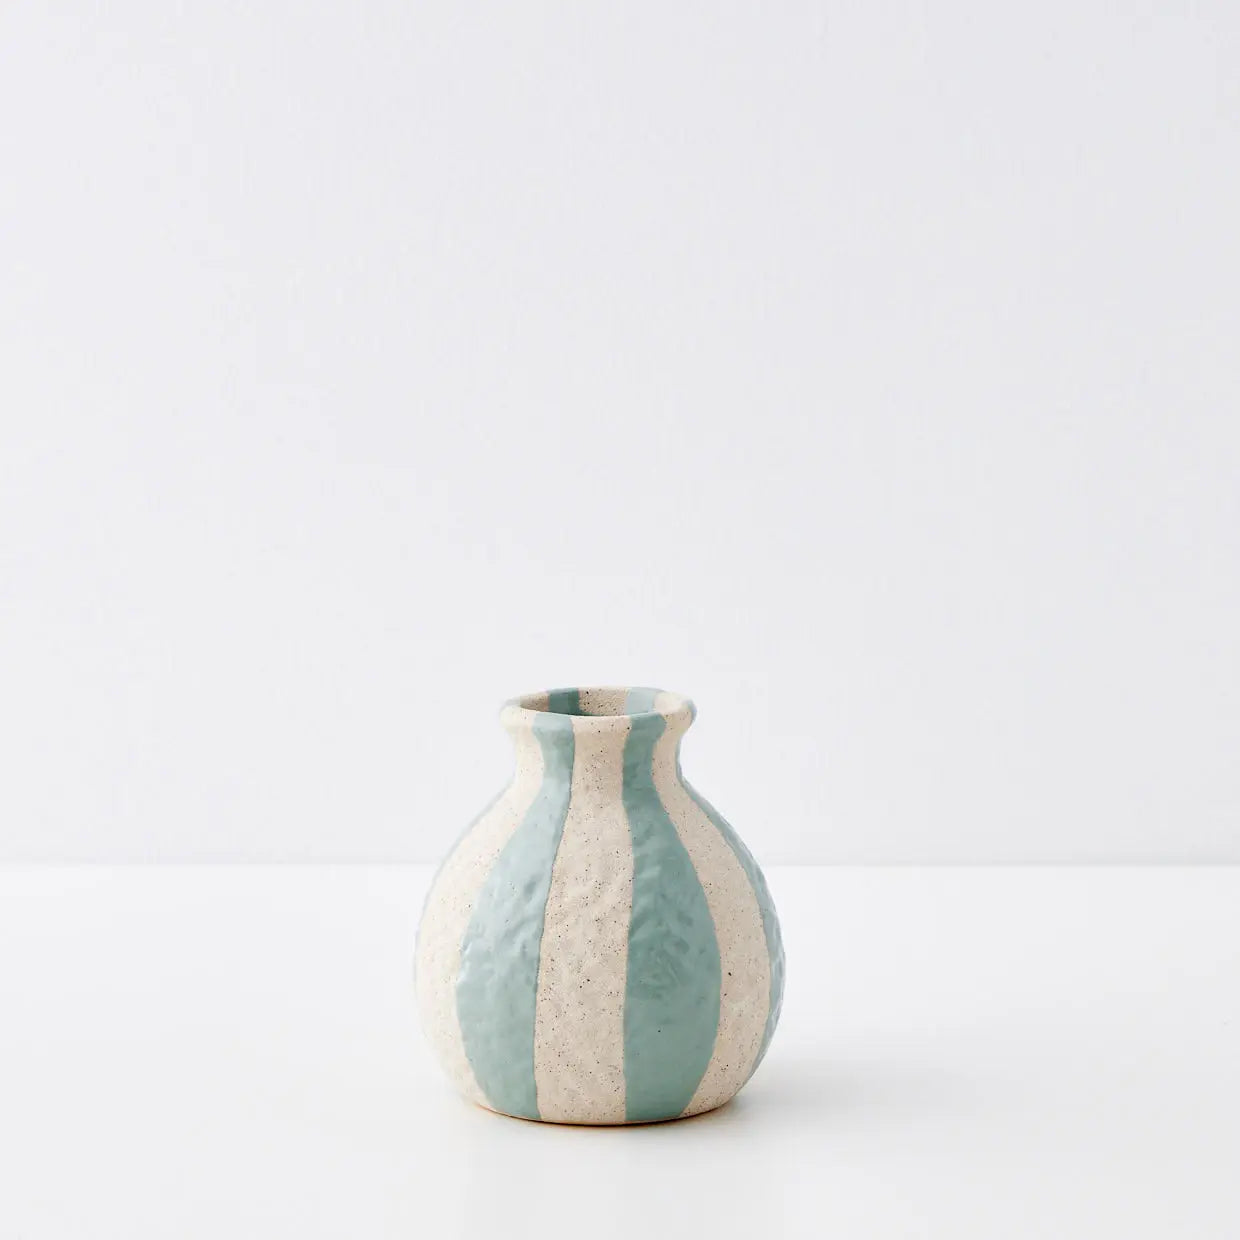 Catalina Rotund Ceramic Bud Vase - GigiandTom